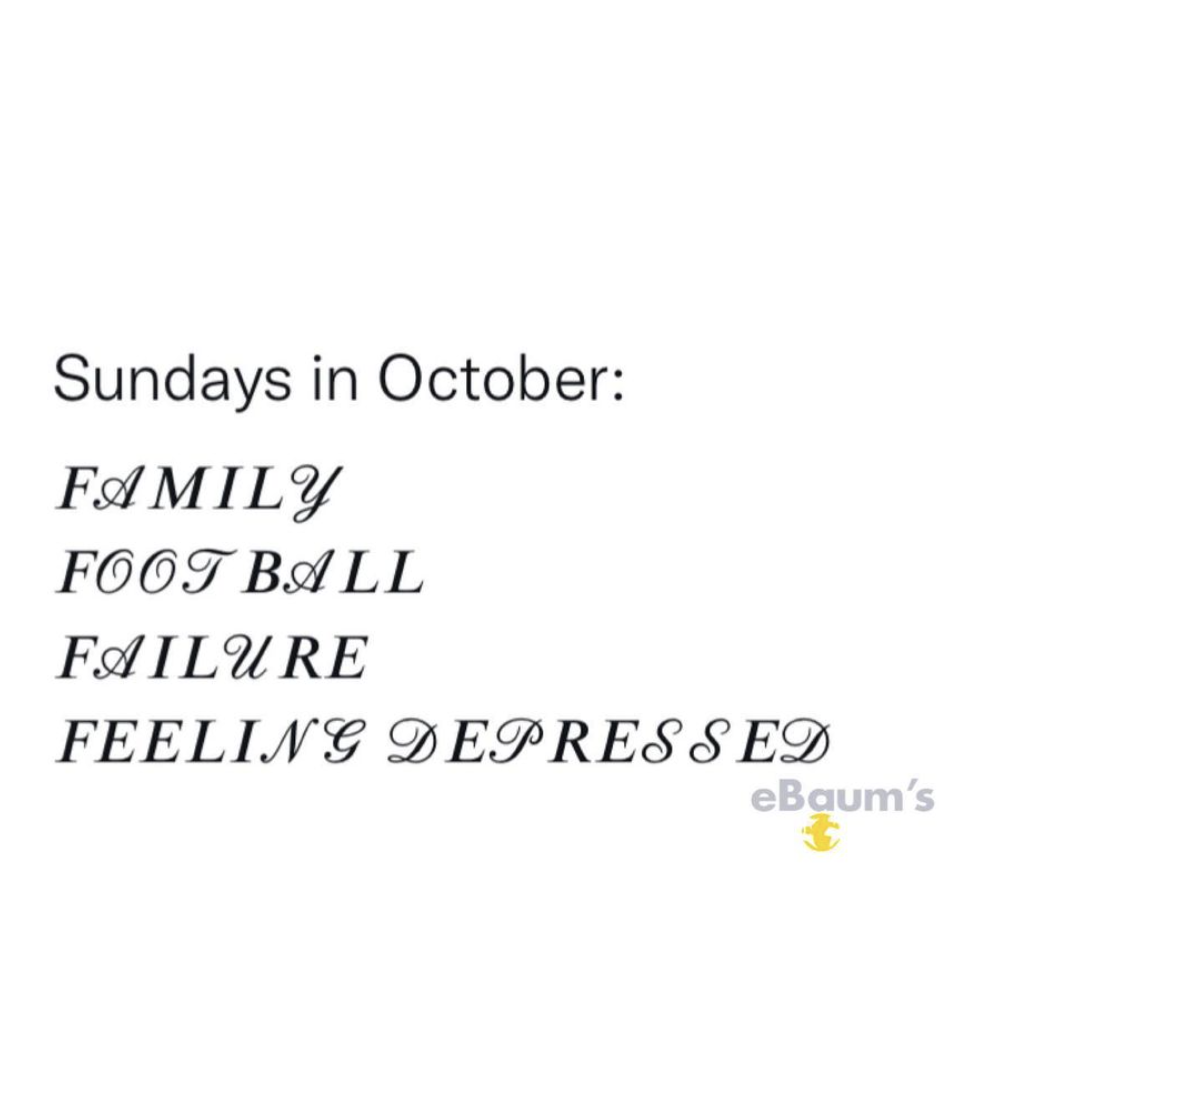 Sundays in October Family Foot Ball Failure Feeling Depressed eBaum's